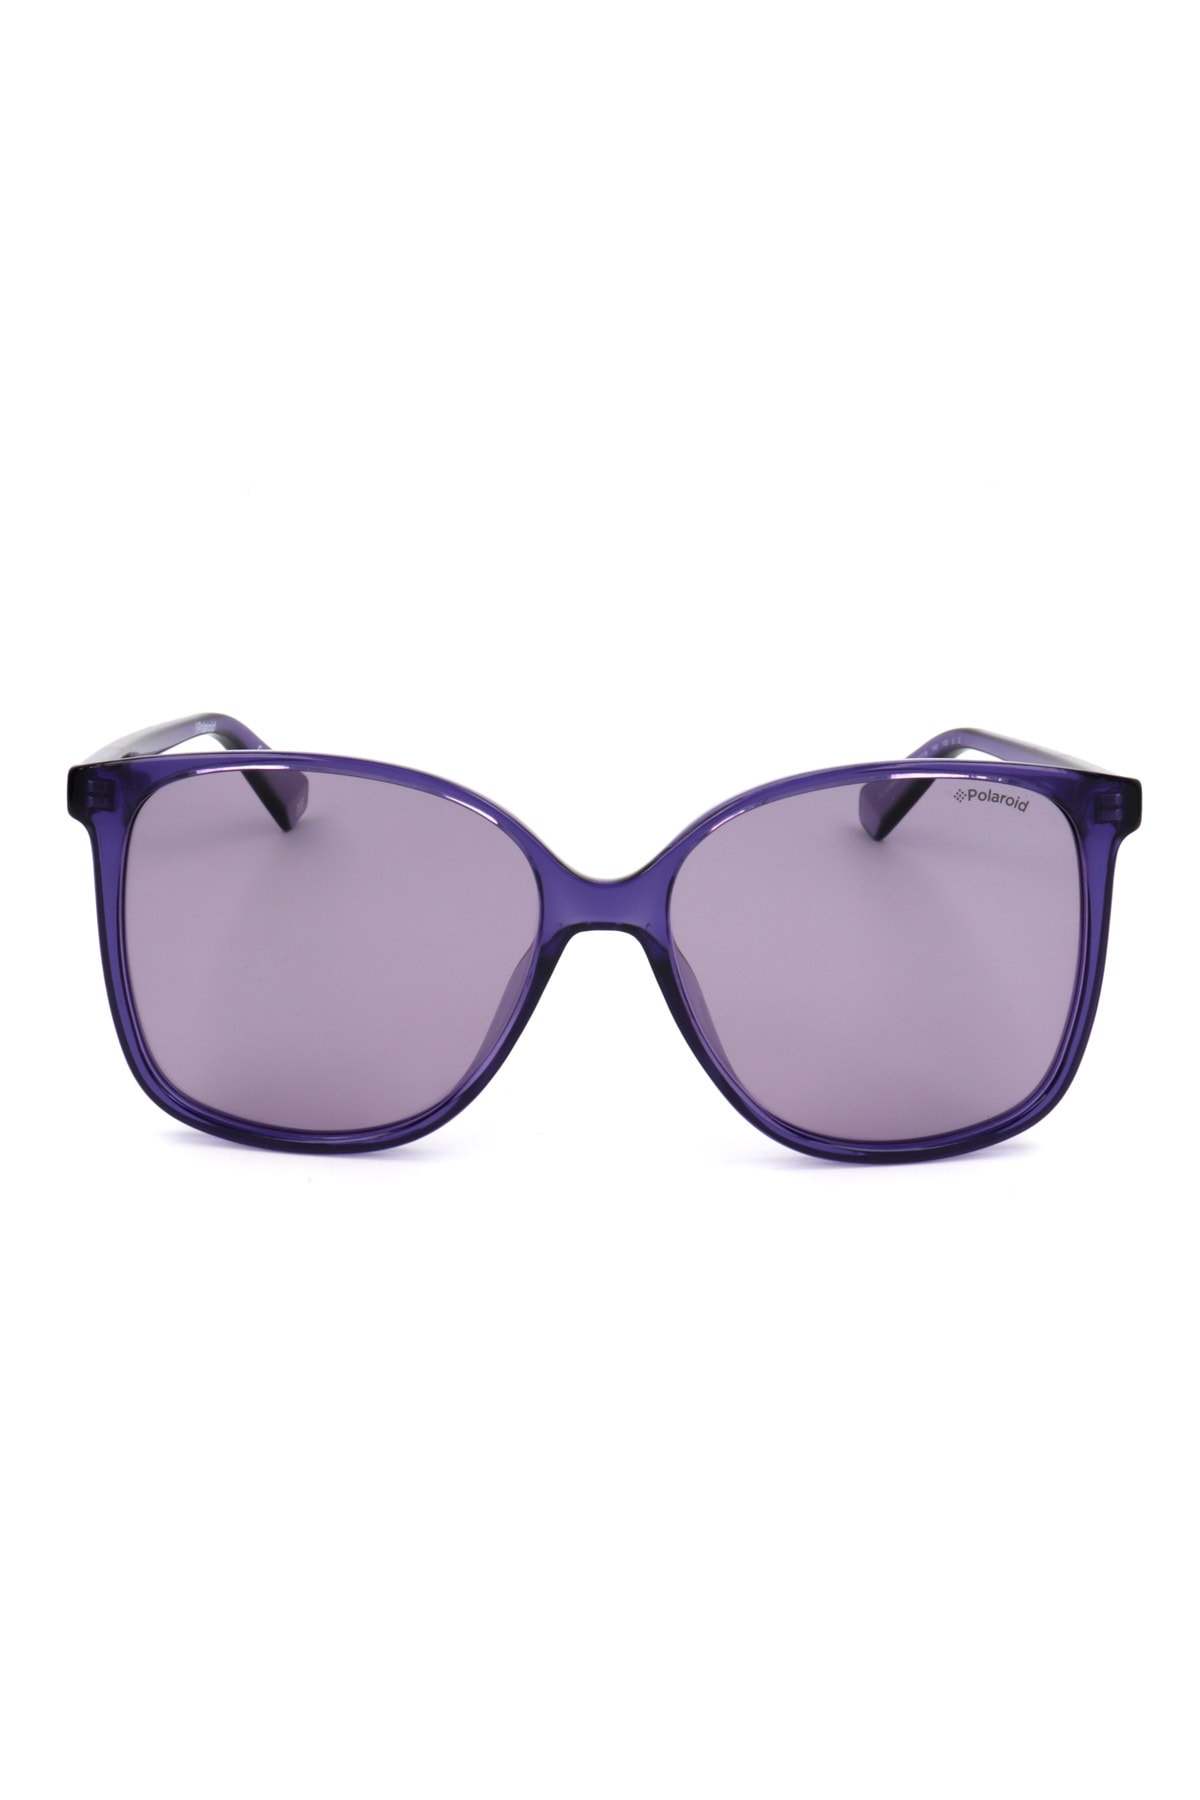 Polaroid Sonnenbrille - Lila - Unifarben